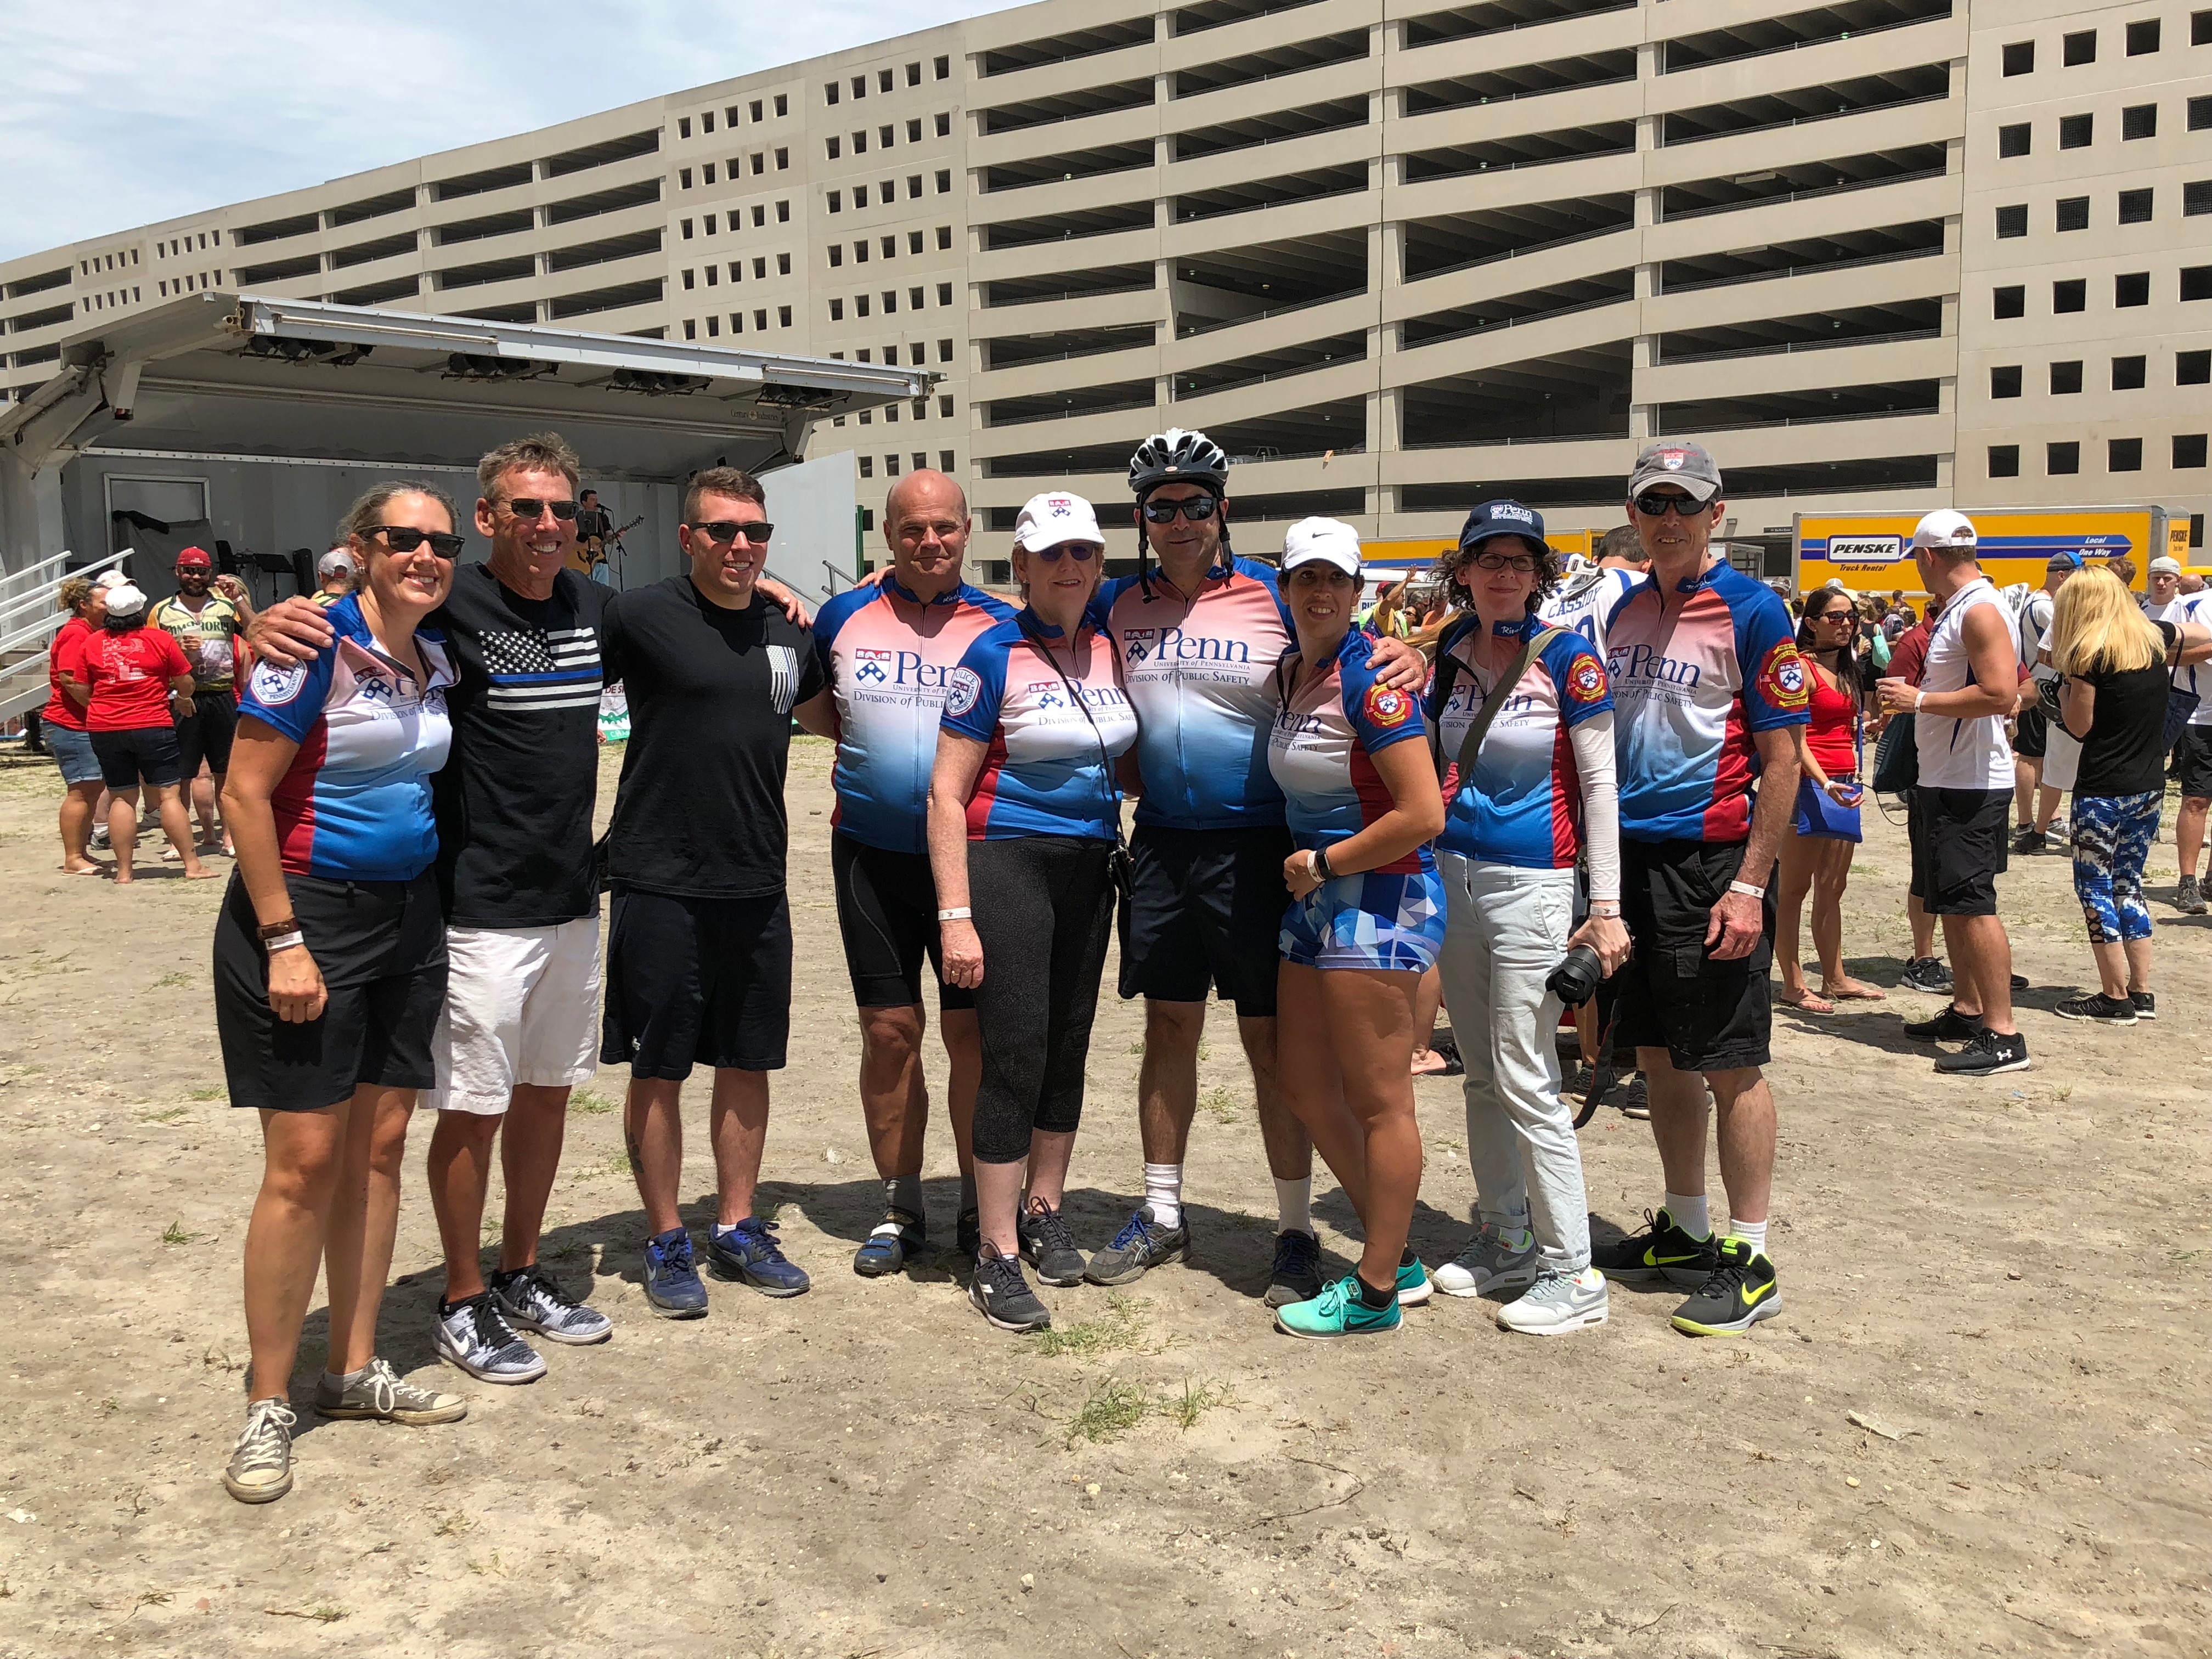 2018 Tour de Shore - Team members w VP Rush